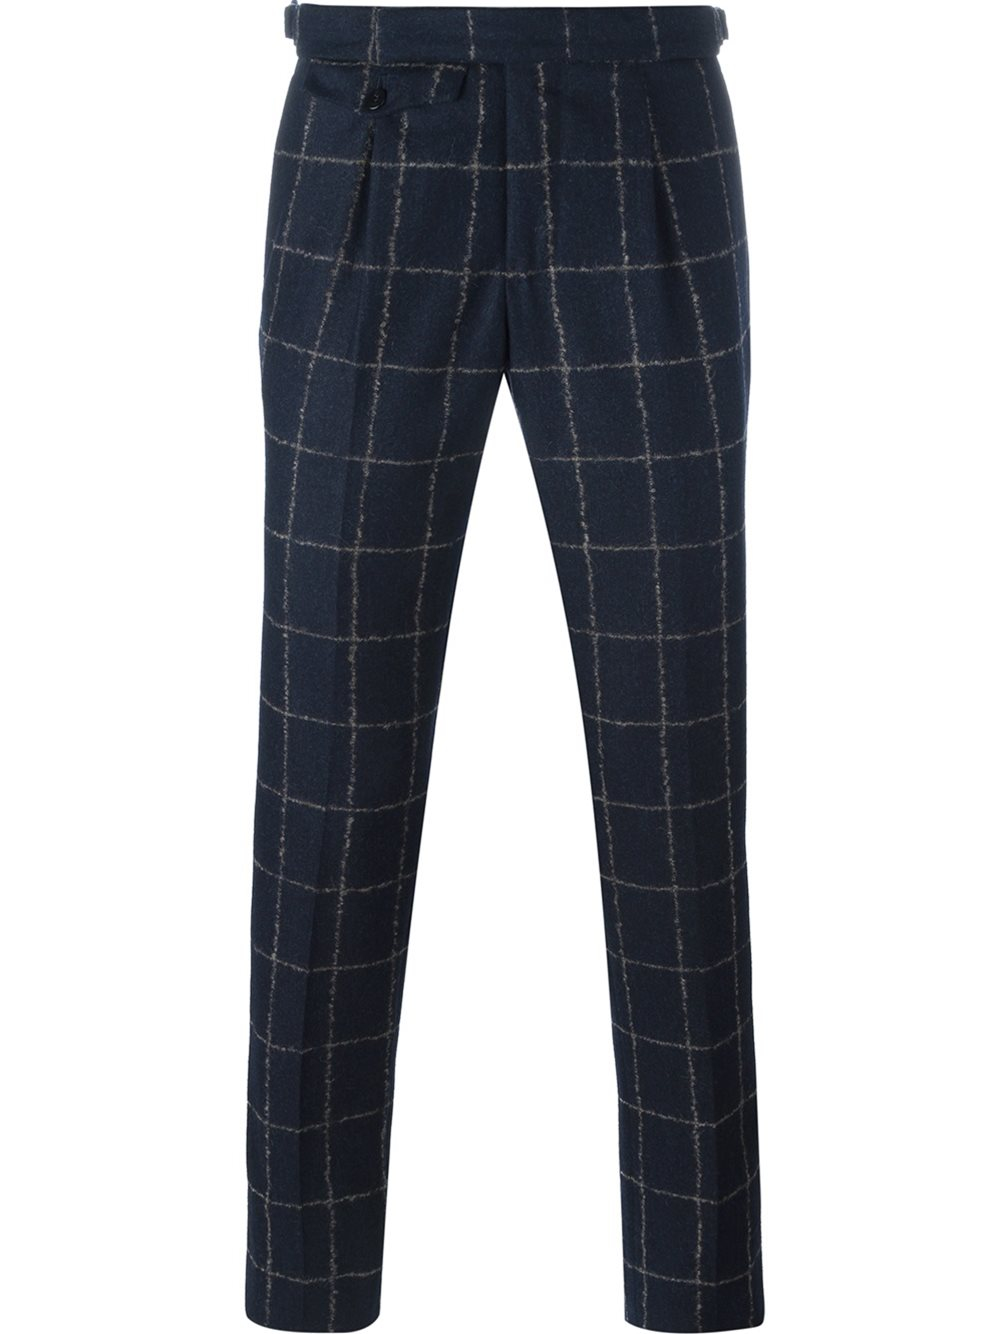 Incotex Wool 'slim-fit Pattern 30' Trousers in Blue for Men - Lyst